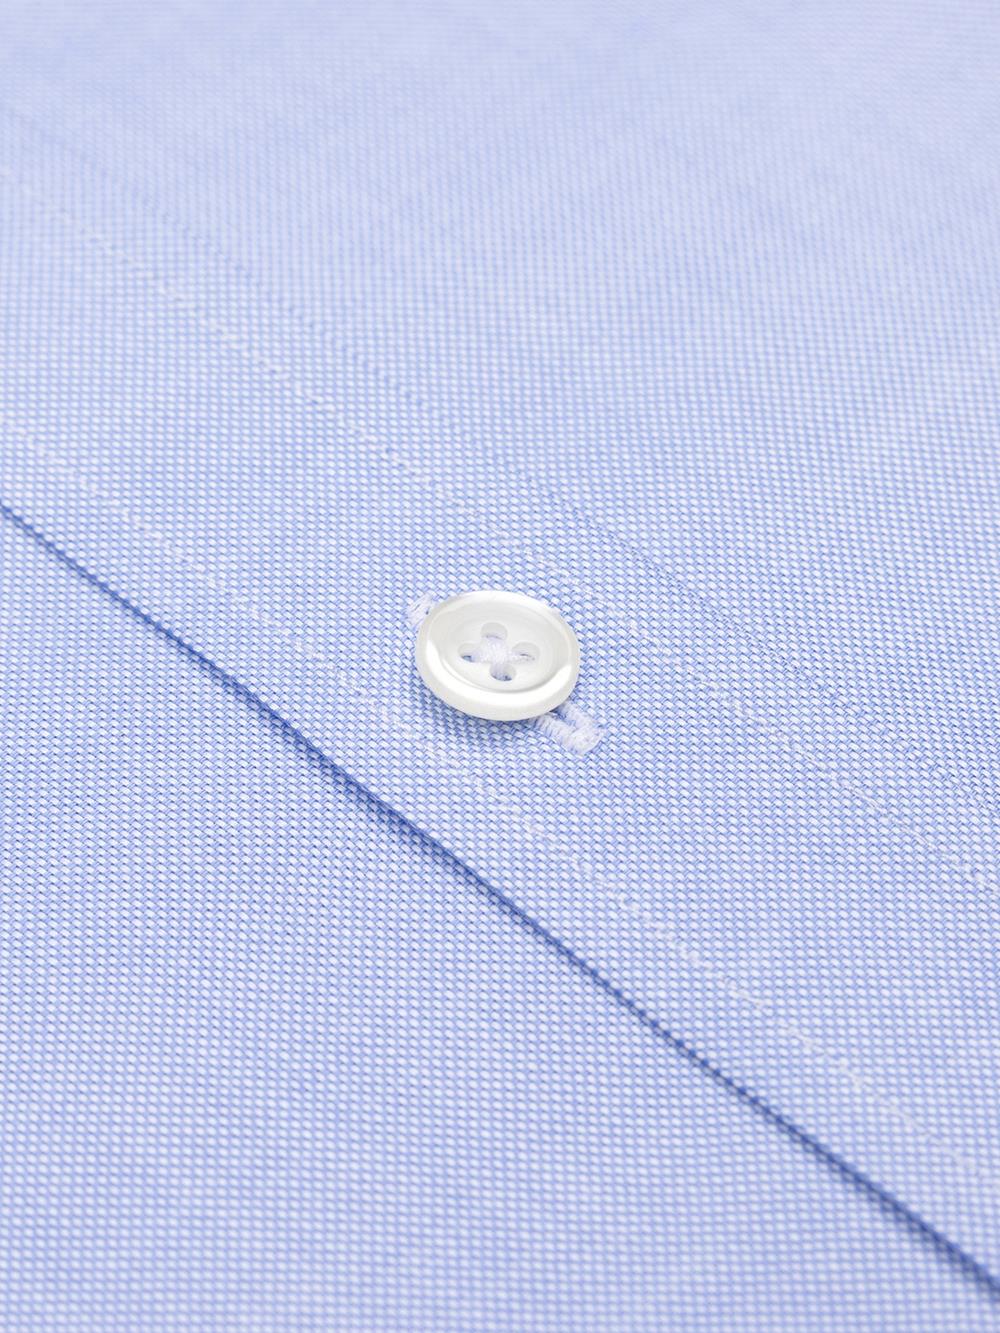 Oxfordhemd himmelblau - Doppelmanschetten